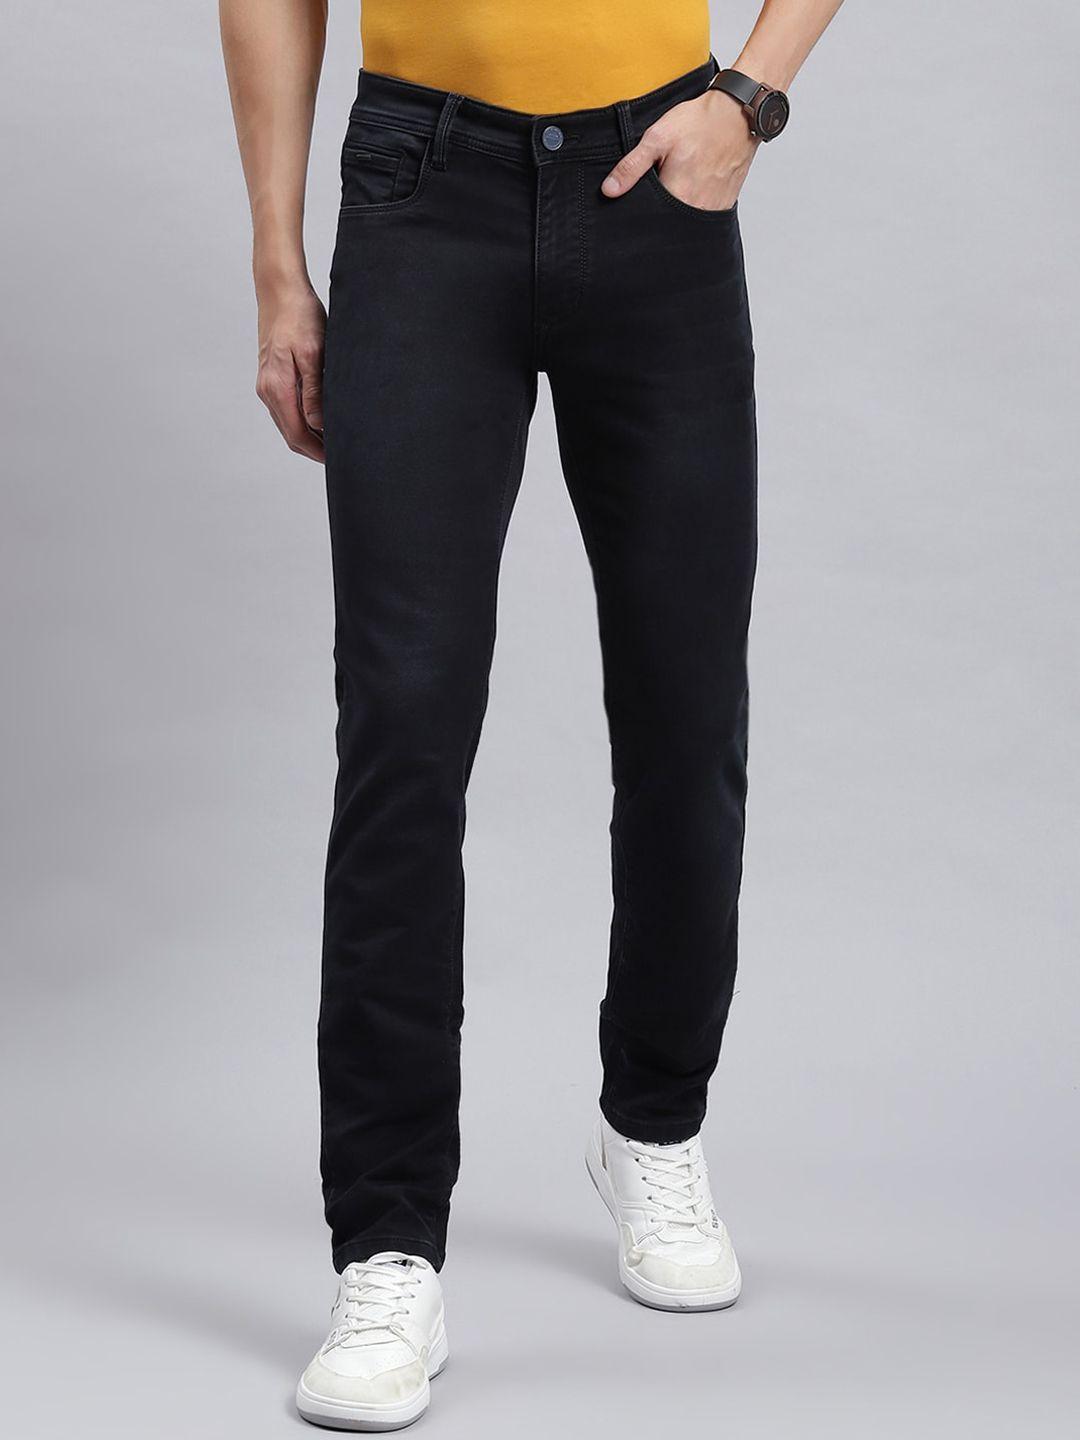 monte-carlo-smart-mid-rise-slim-fit-jeans